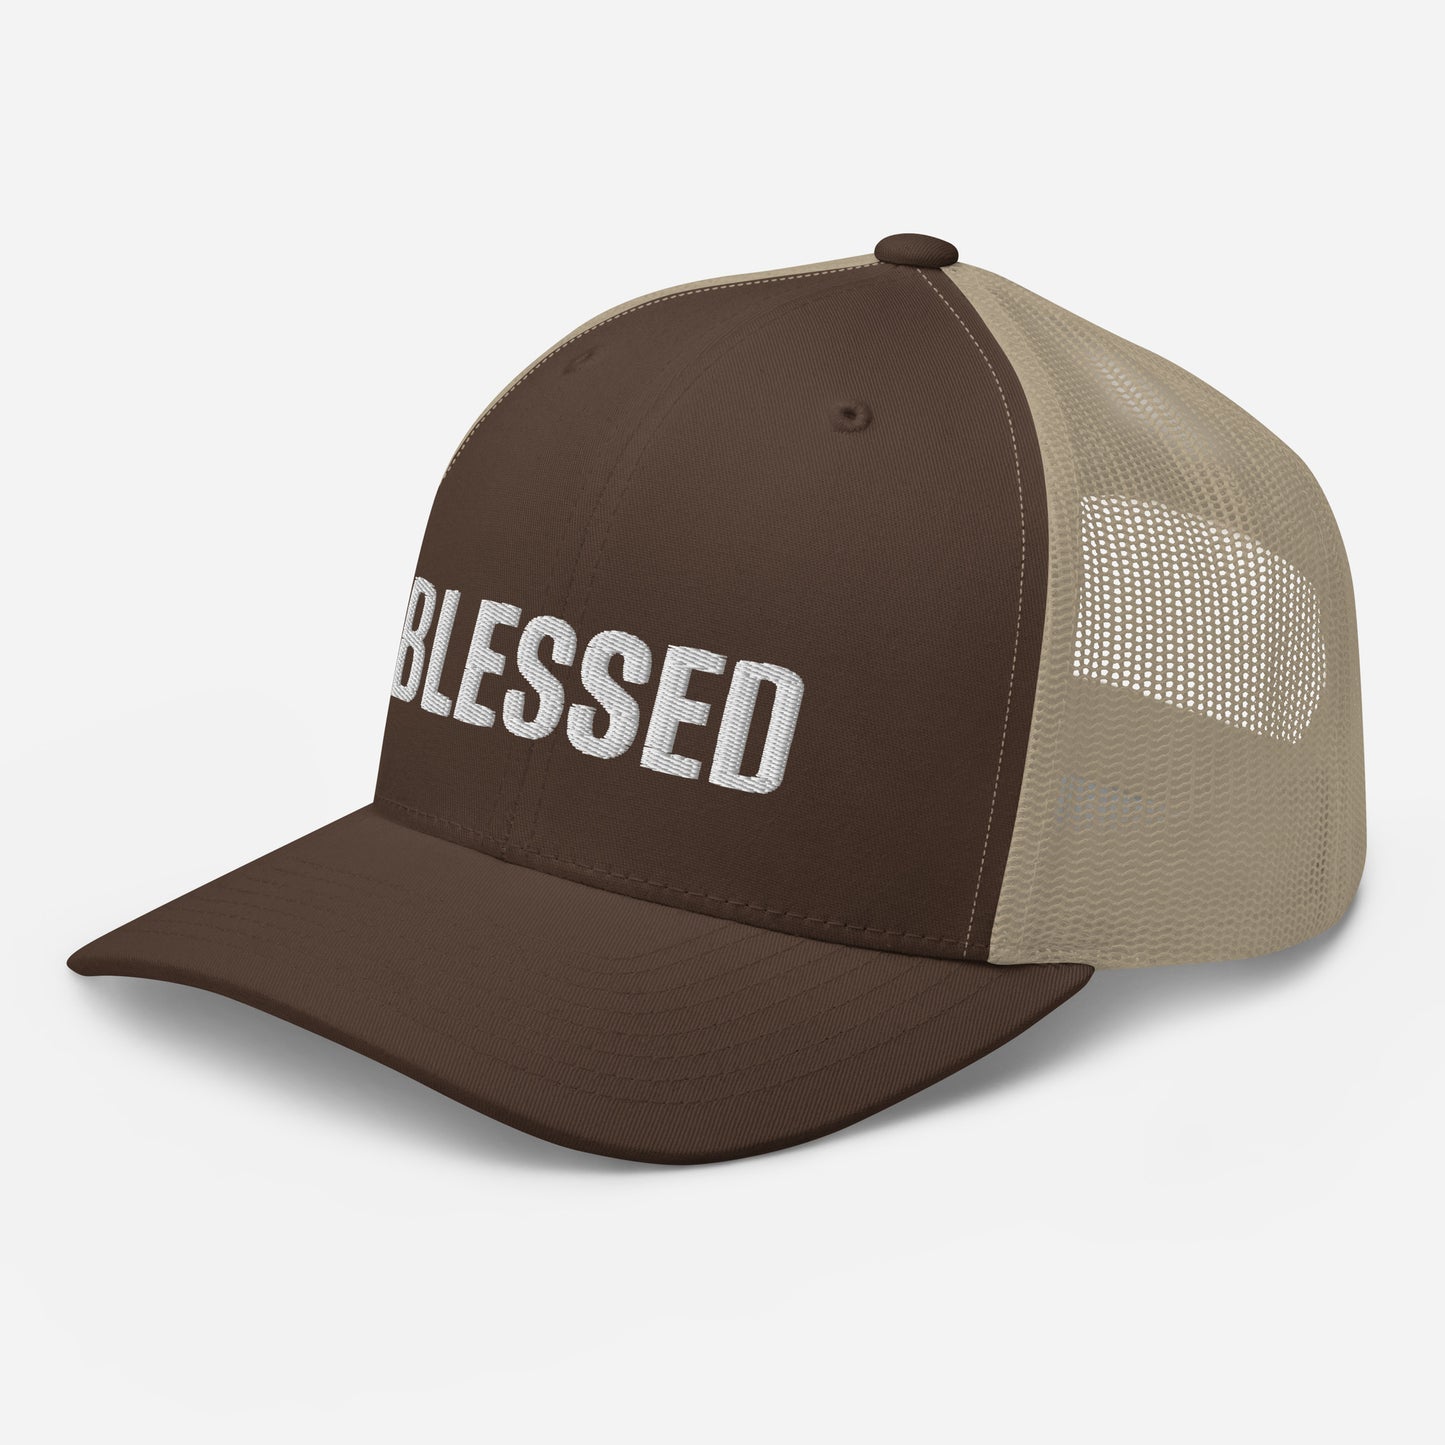 Blessed Trucker Cap